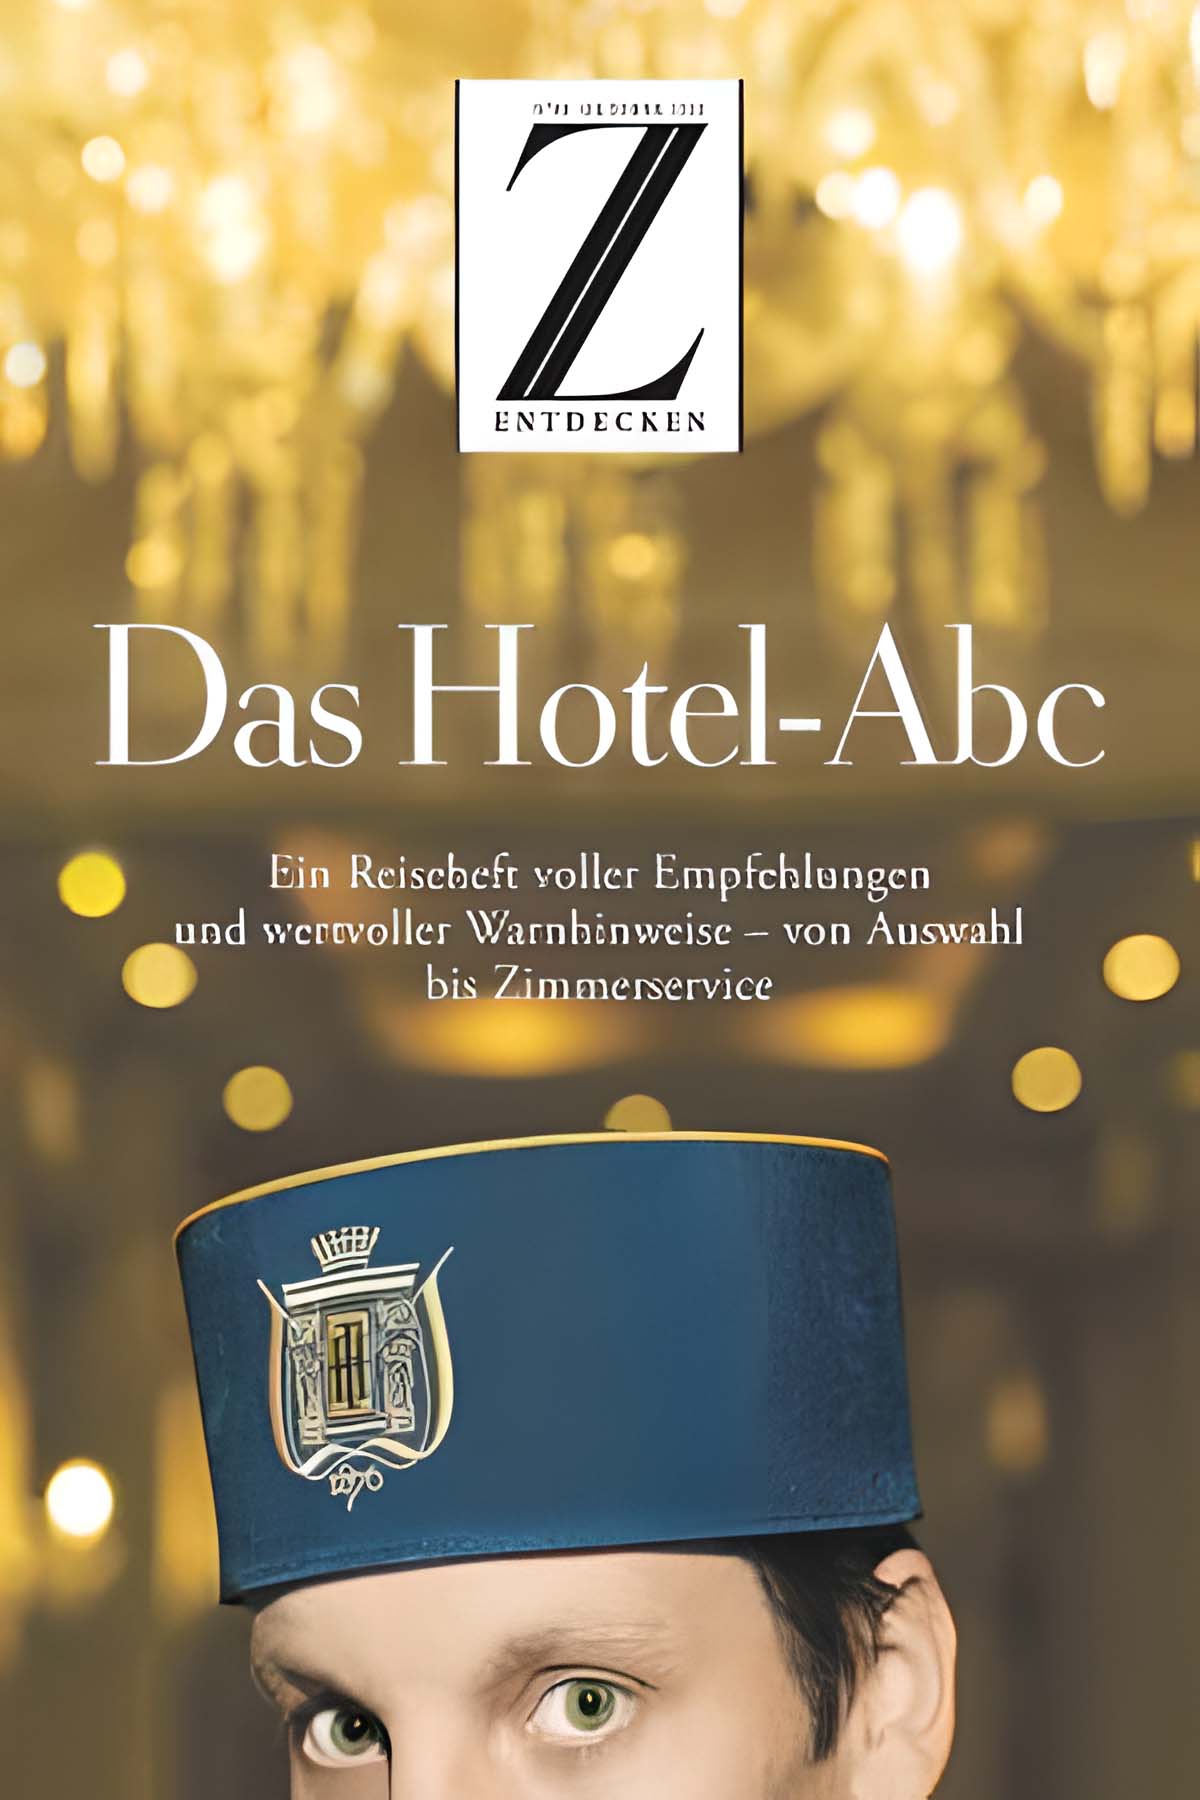 Hotel-ABC A wie Auswahl -wolf-alexander-hanisch - 2